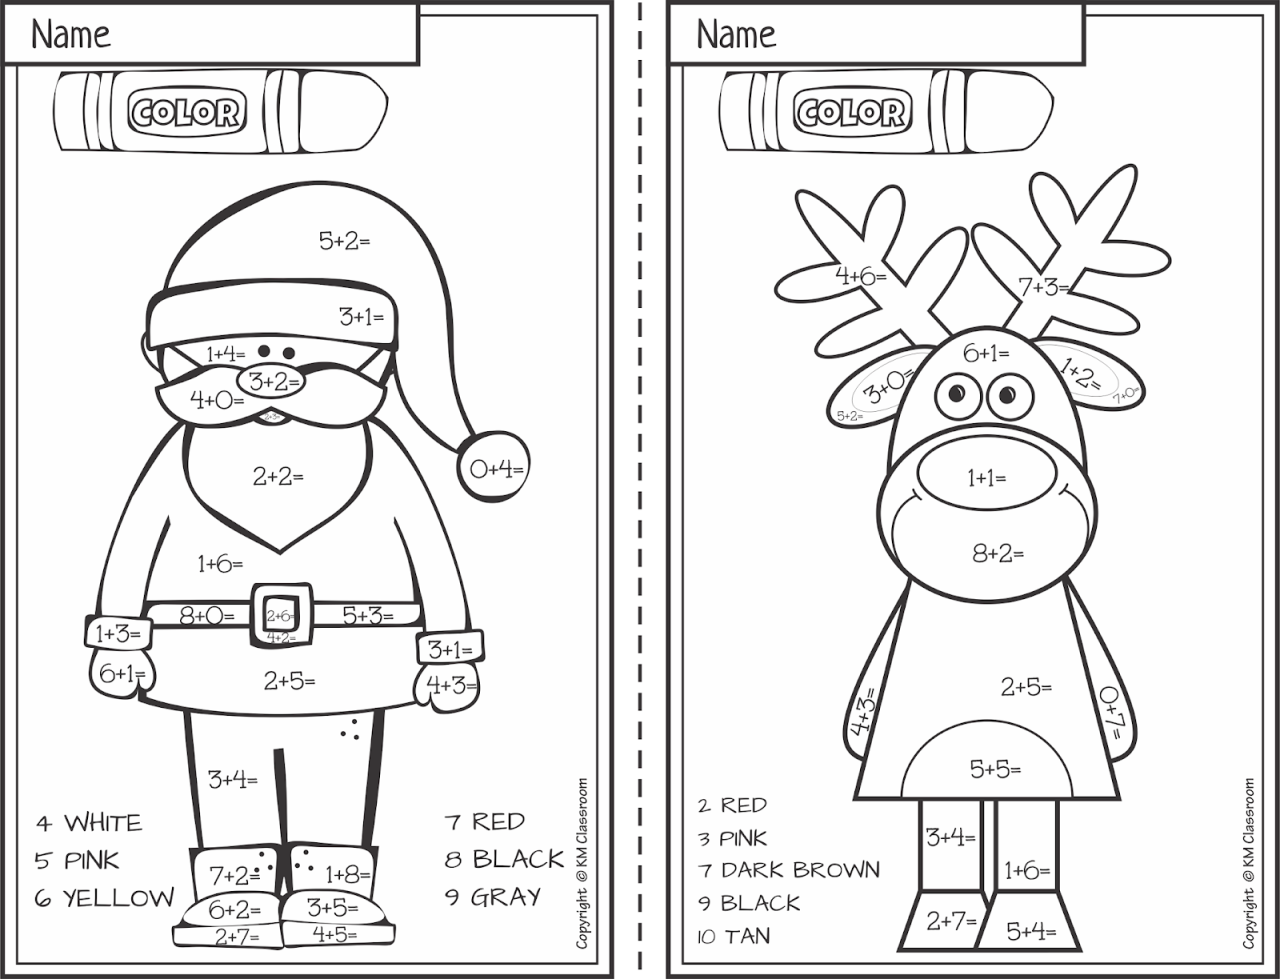 Christmas Addition Worksheet Kindergarten